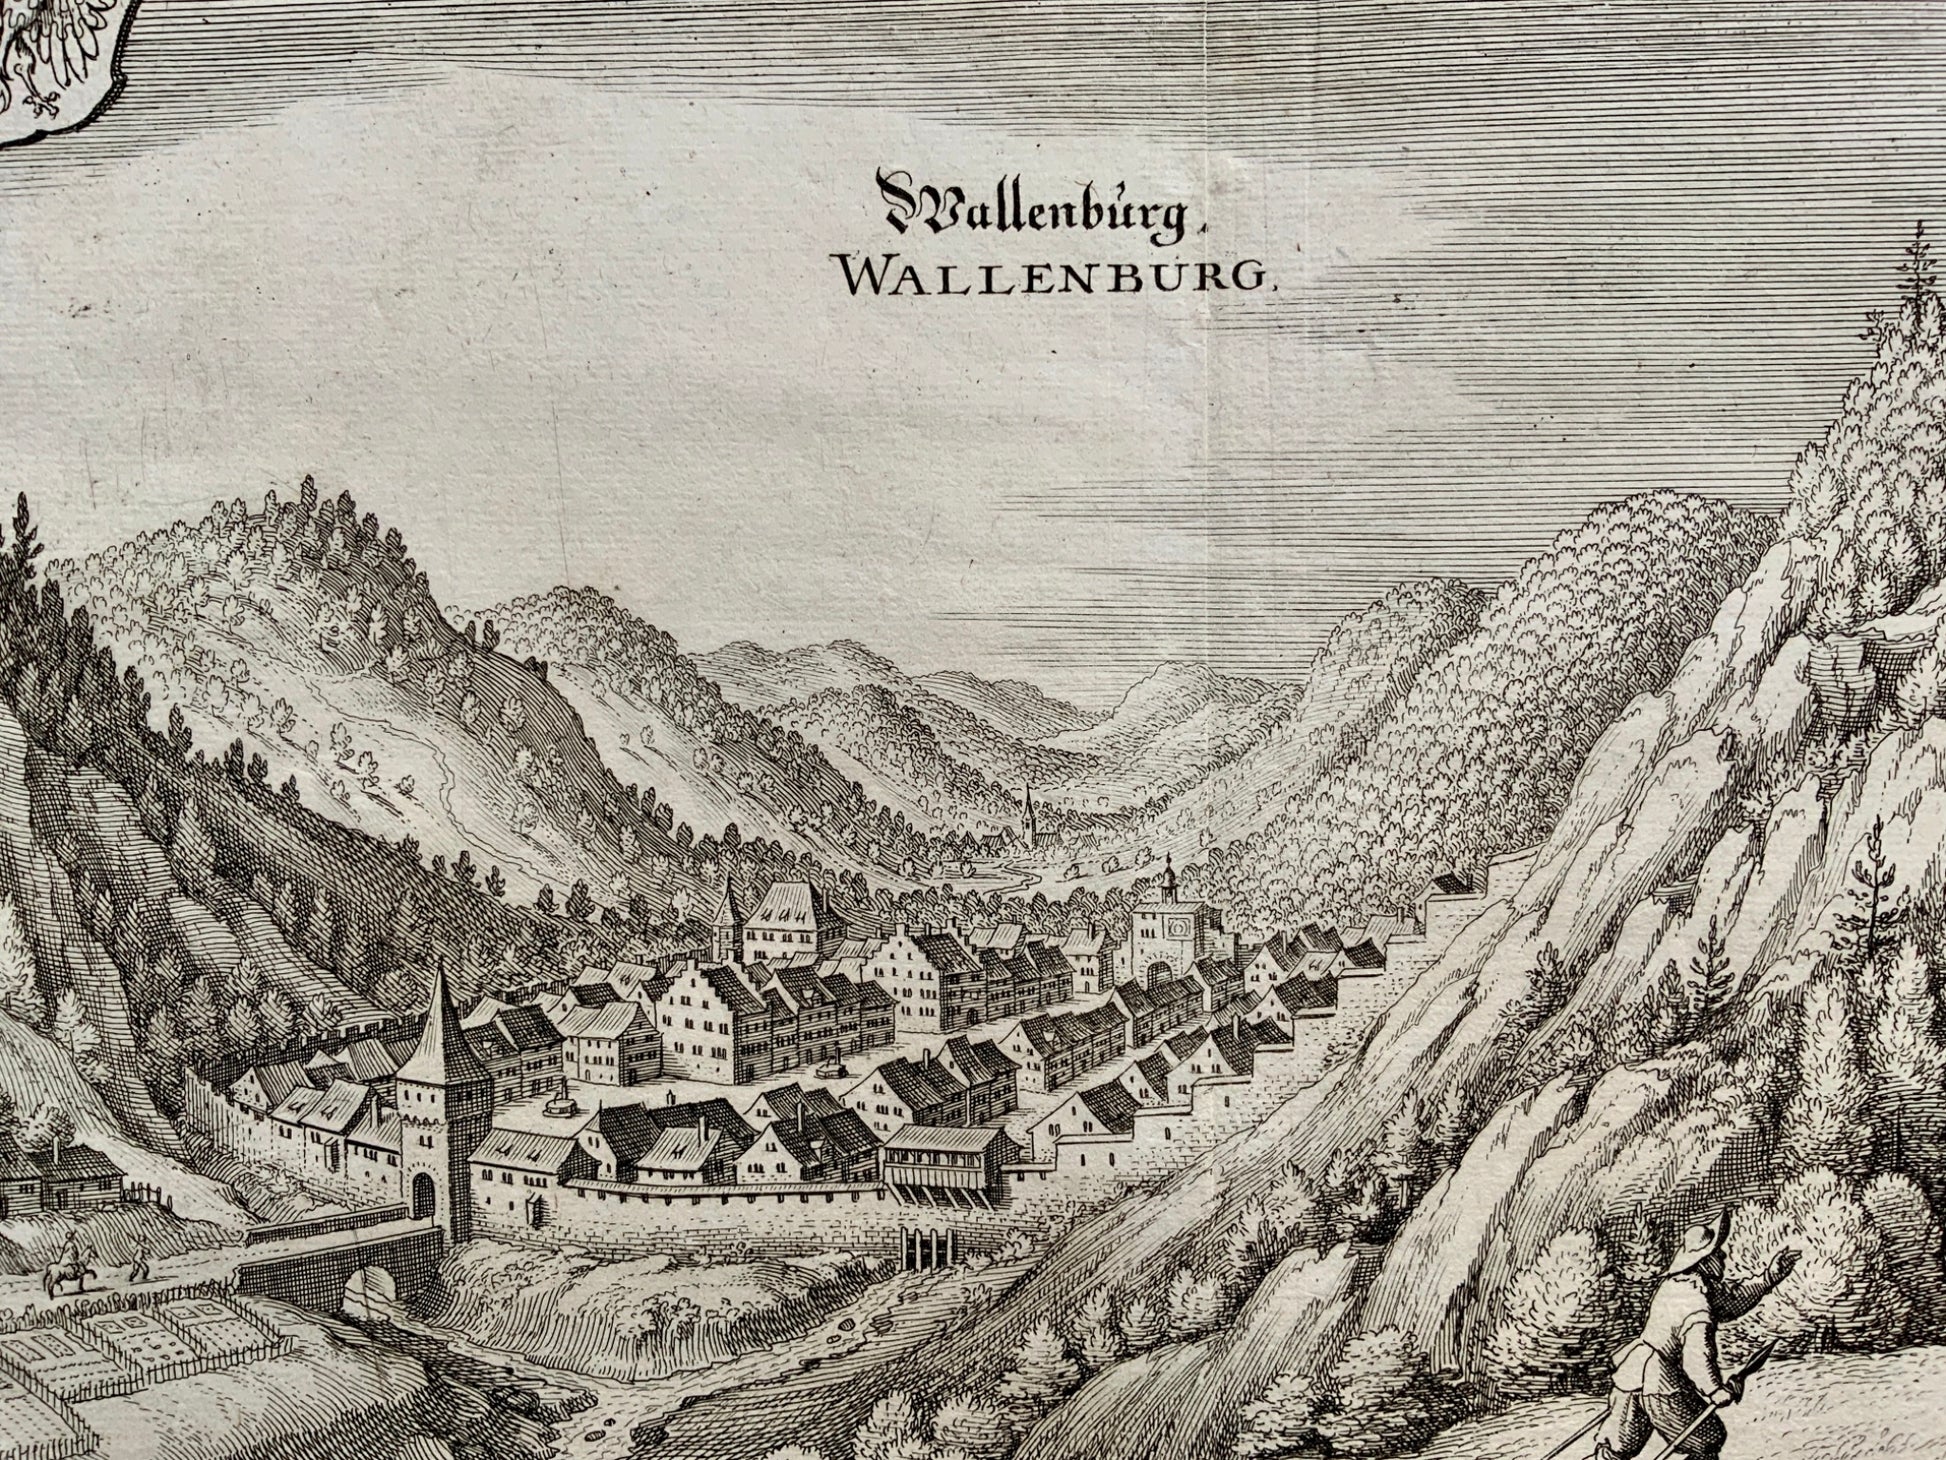 1654 Matthäus Merian - large double folio - WALDENBURG in Basel Switzerland